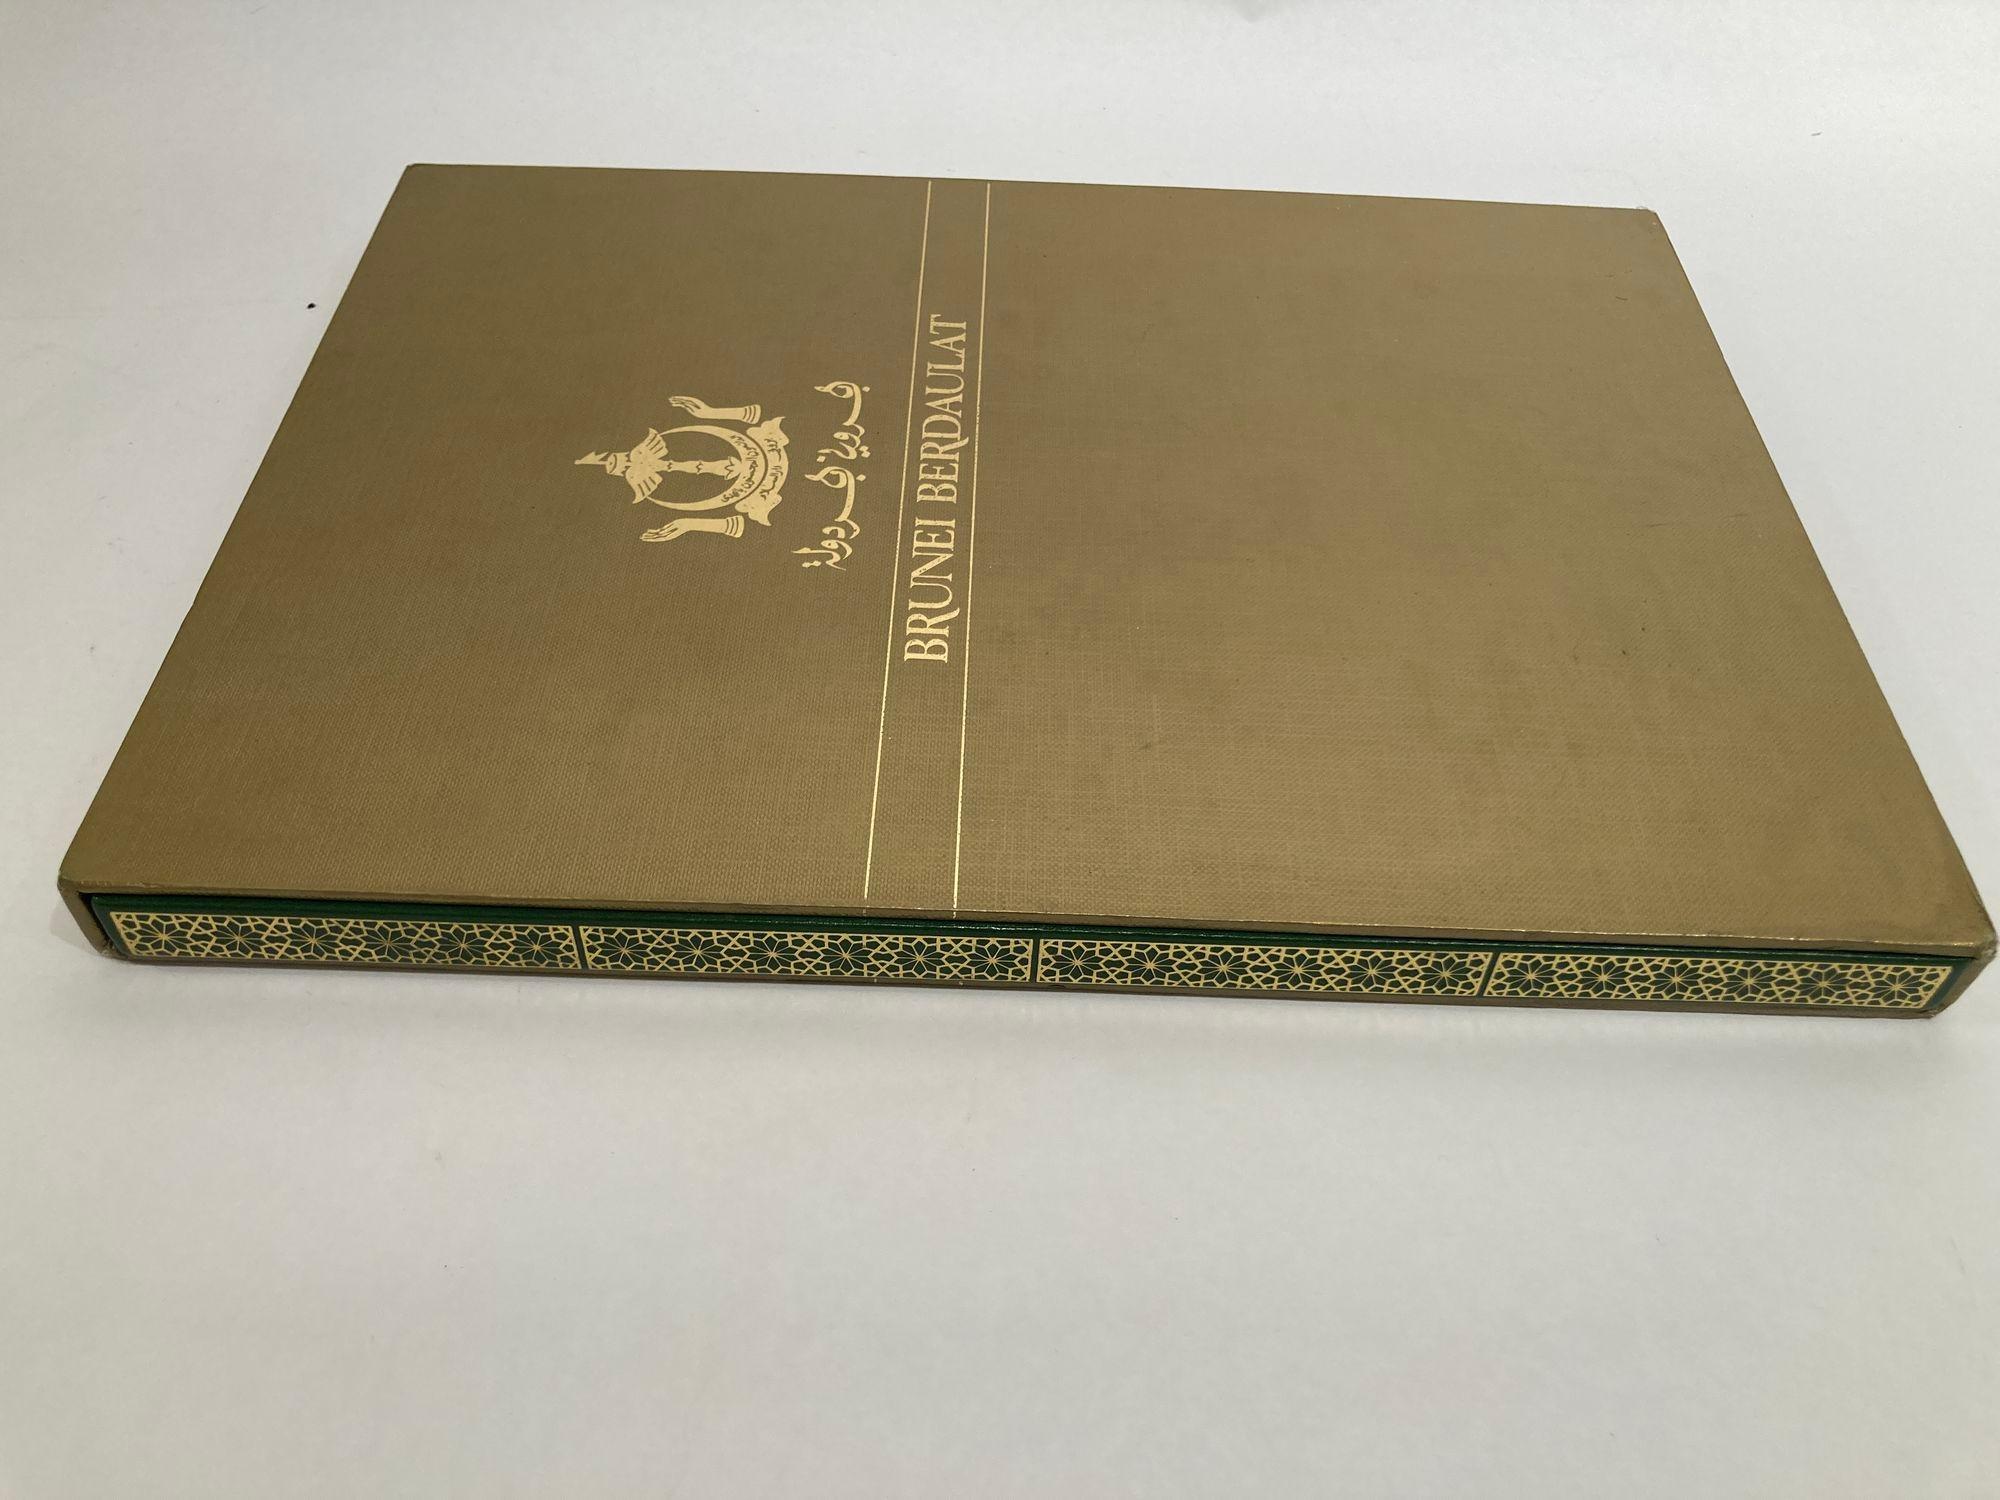 Bruneian Brunei Berdaulat by Wee Beng Huat 1984 Hardcover Book in Sleeve For Sale